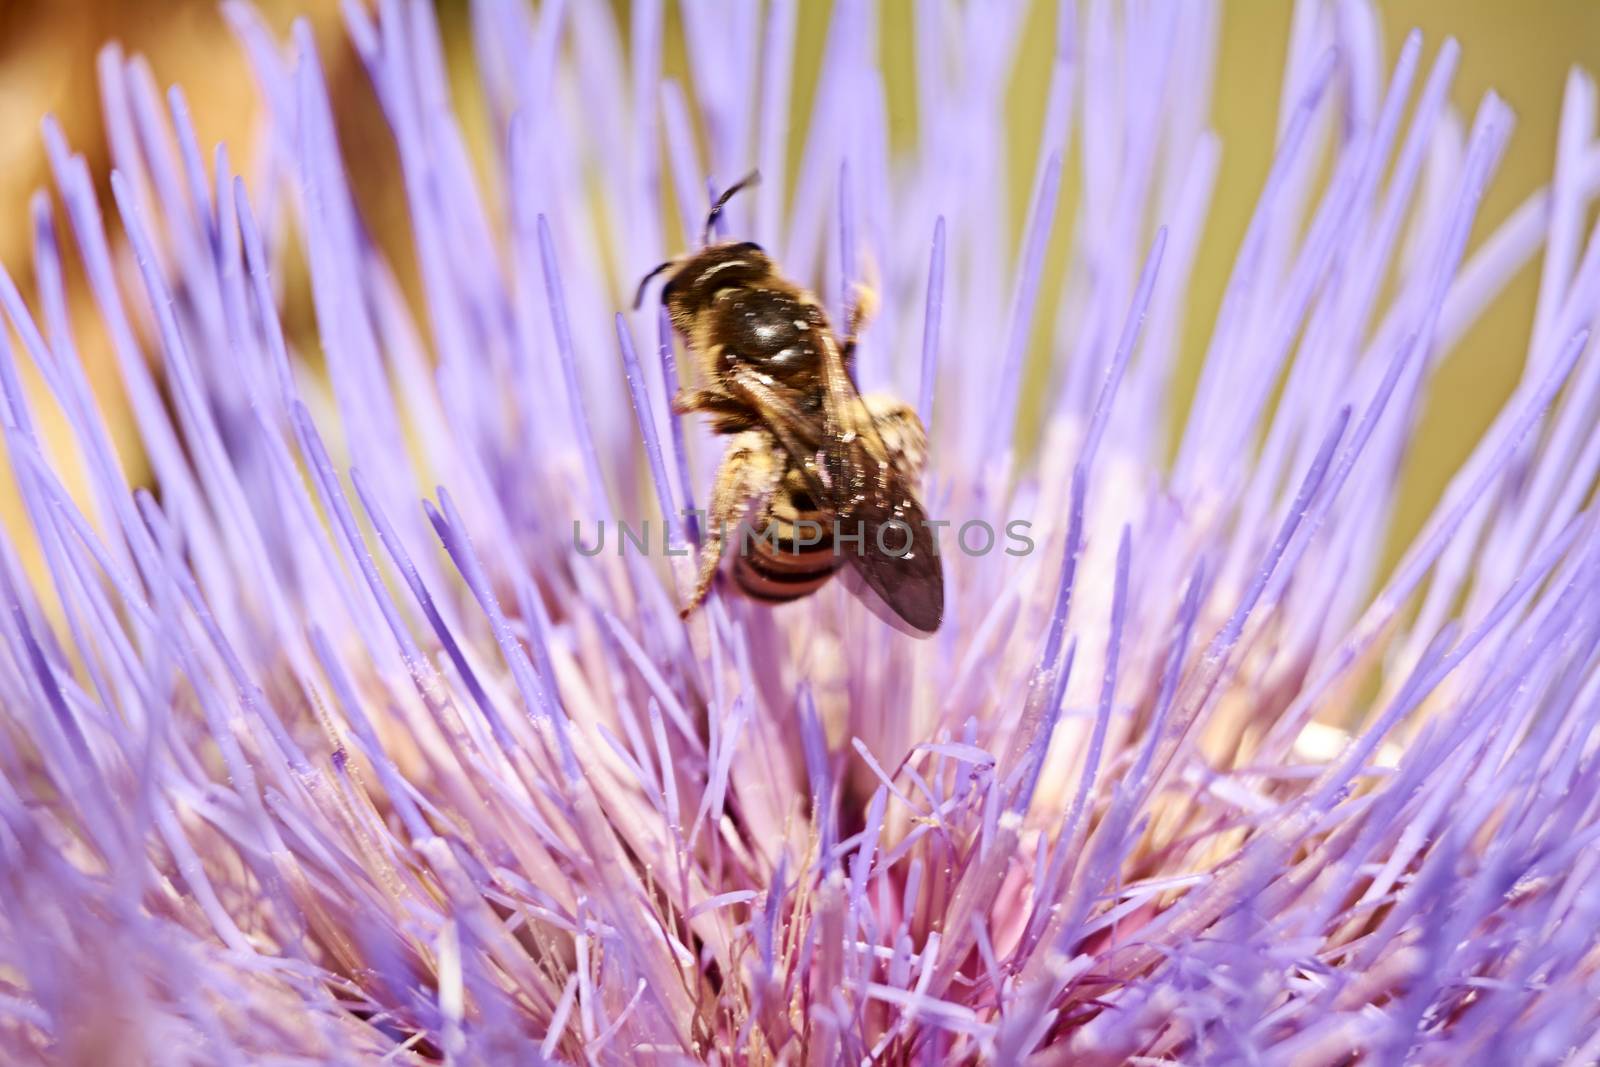 Wasp on pink flower eating pollen by raul_ruiz